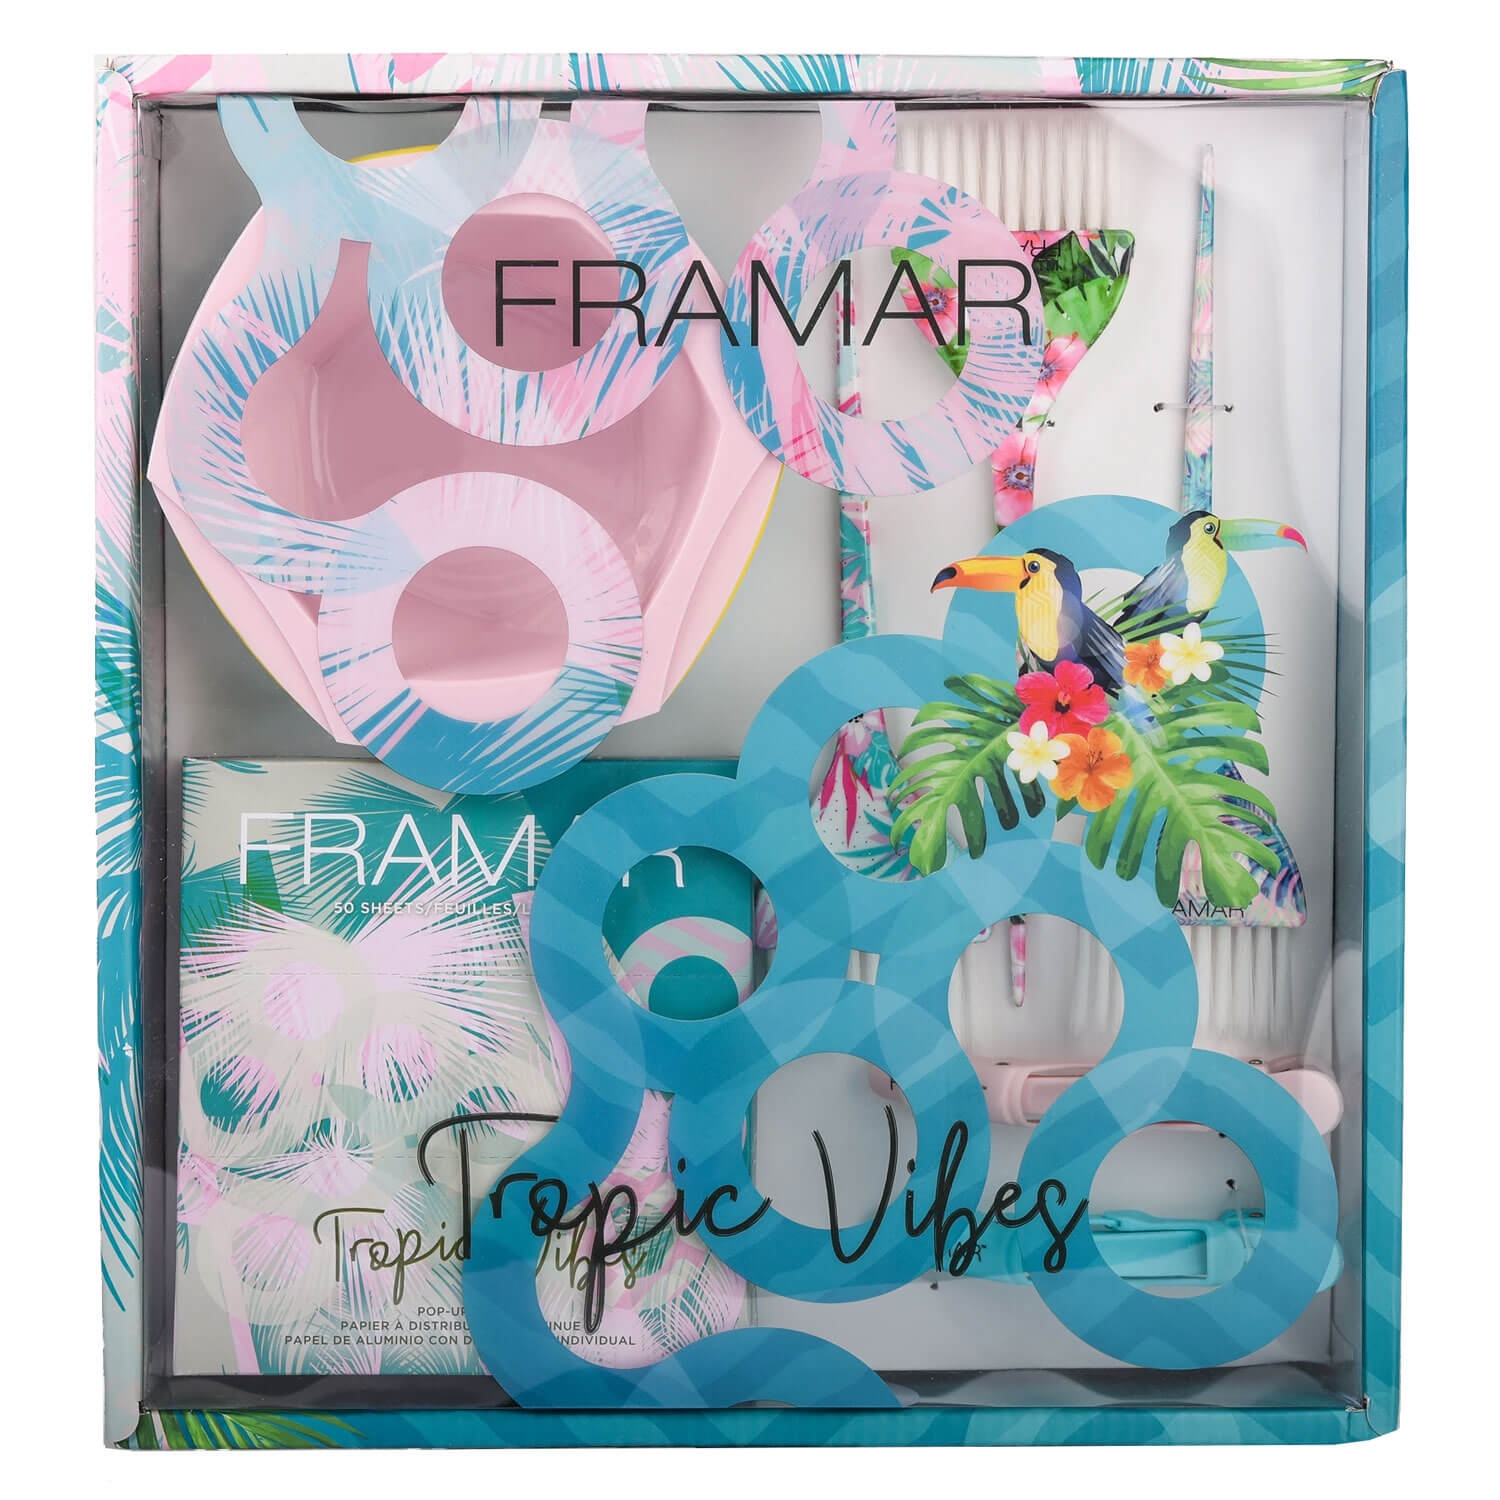 Produktbild von Framar - Tropic Vibes Colorist Kit